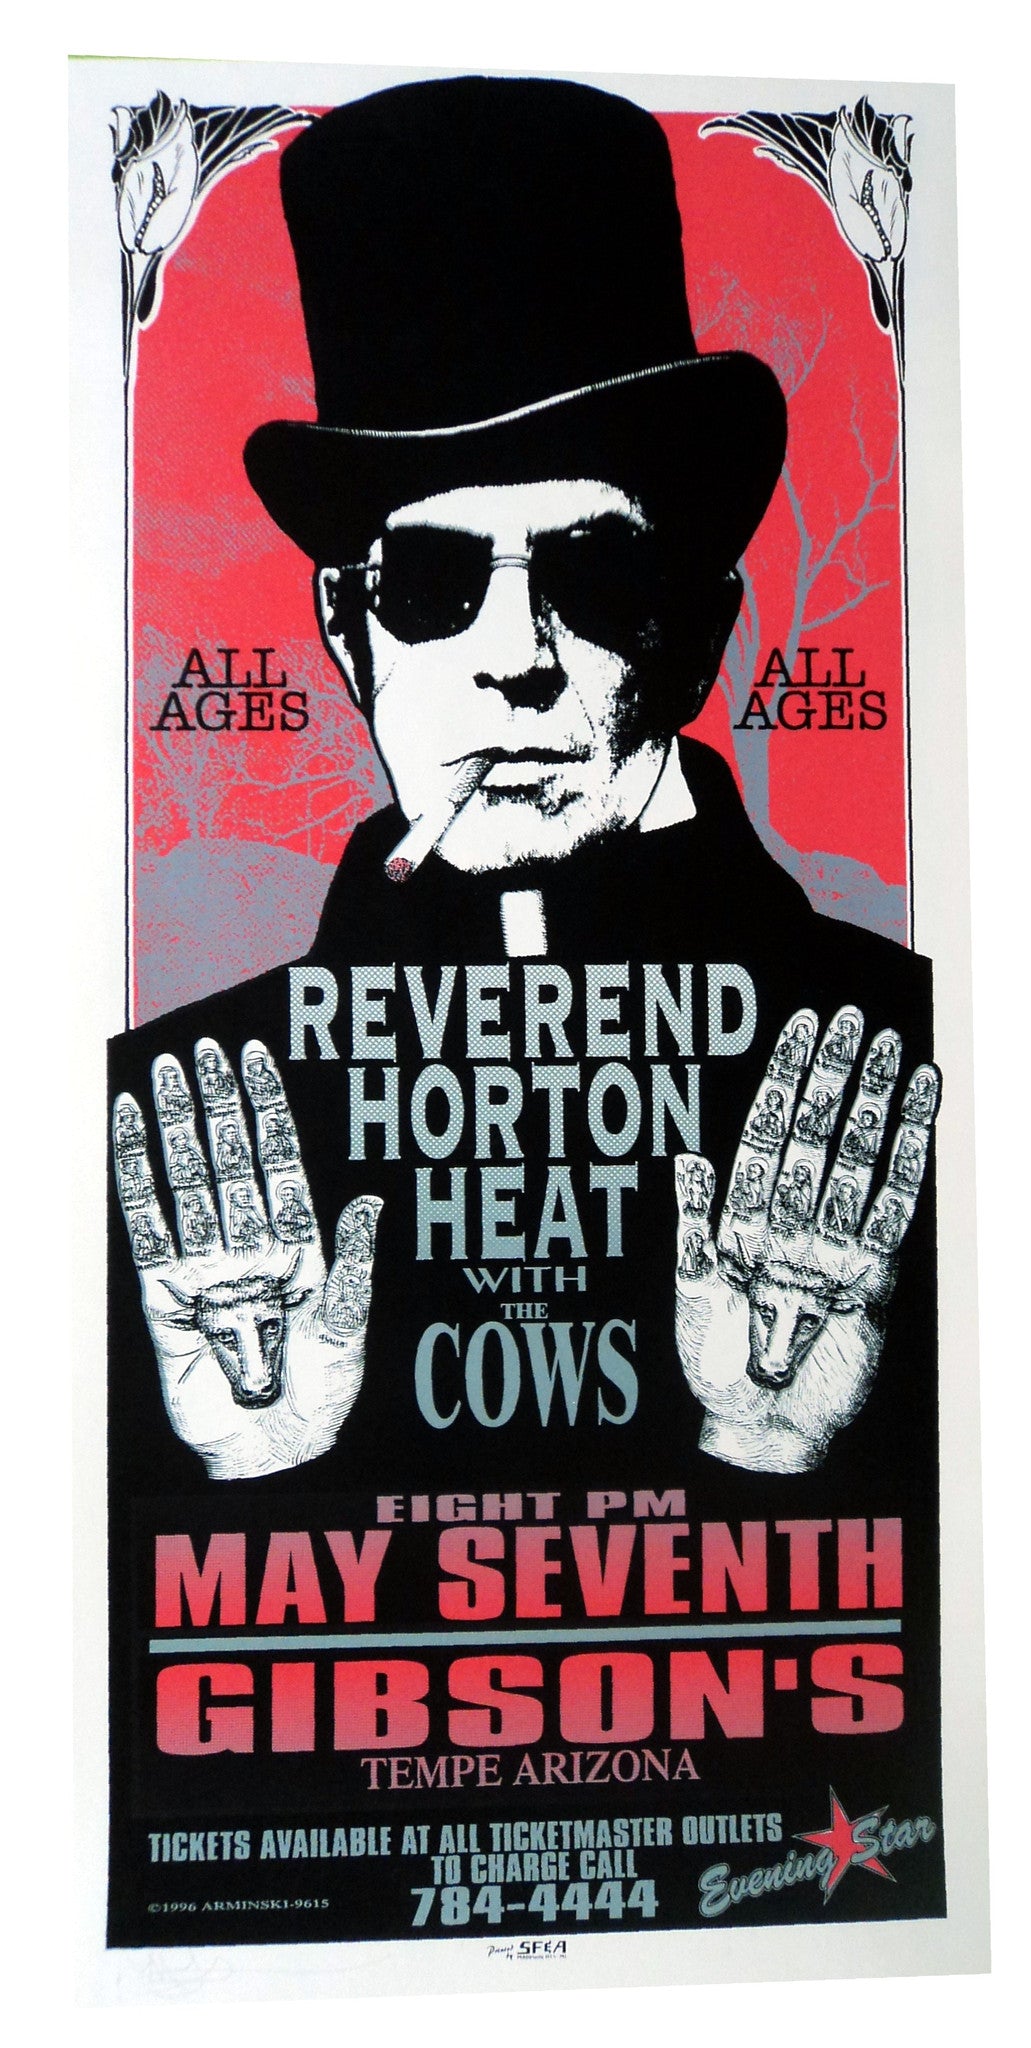 Mark Arminski - 1996 - Rev Horton Heat Concert Poster